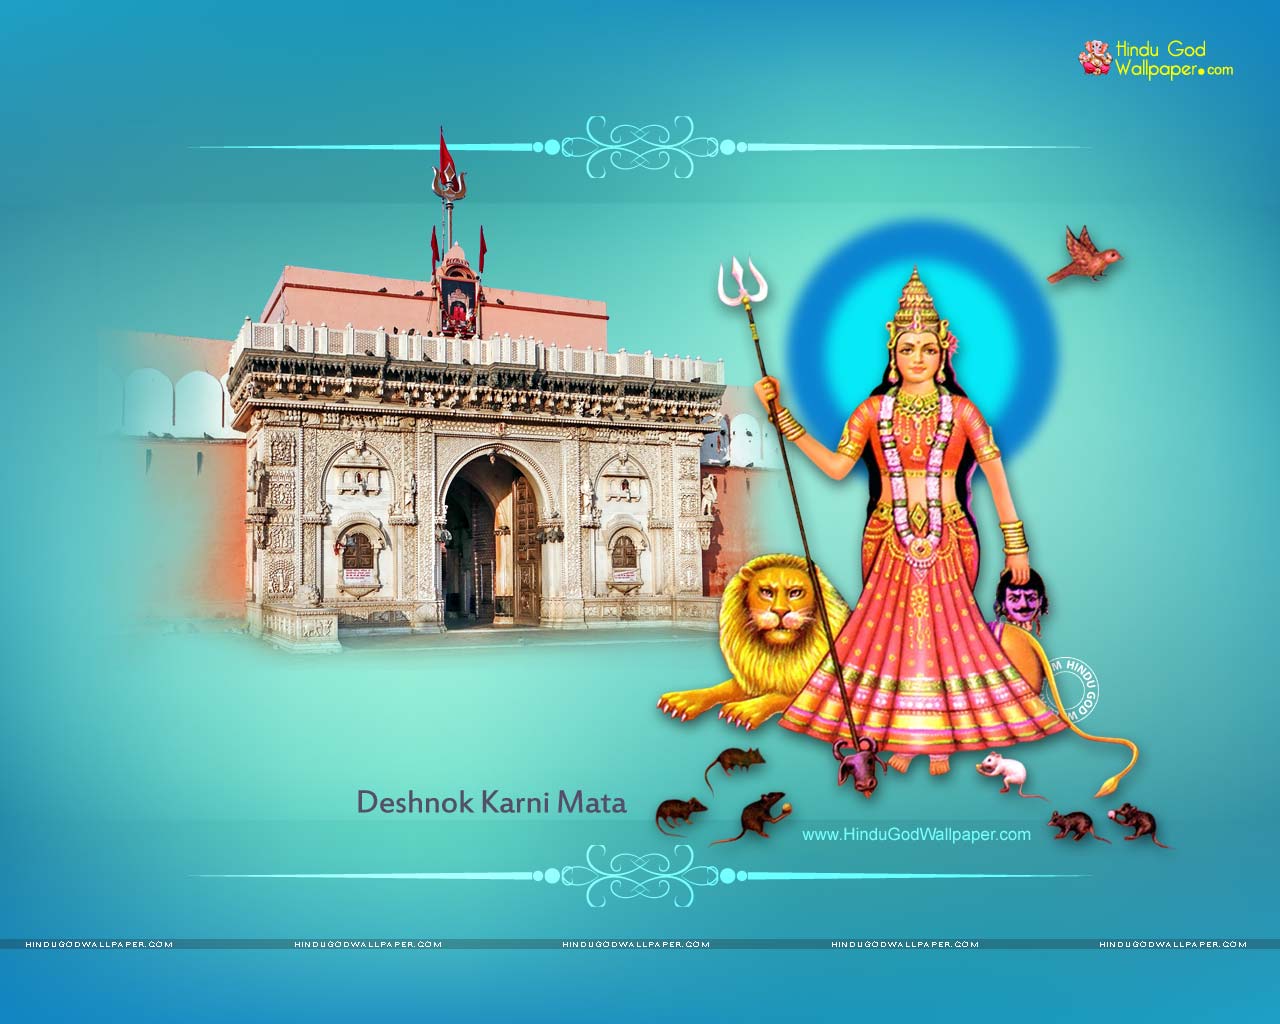 Deshnok Karni Mata Wallpapers, HD Images, Photos Download